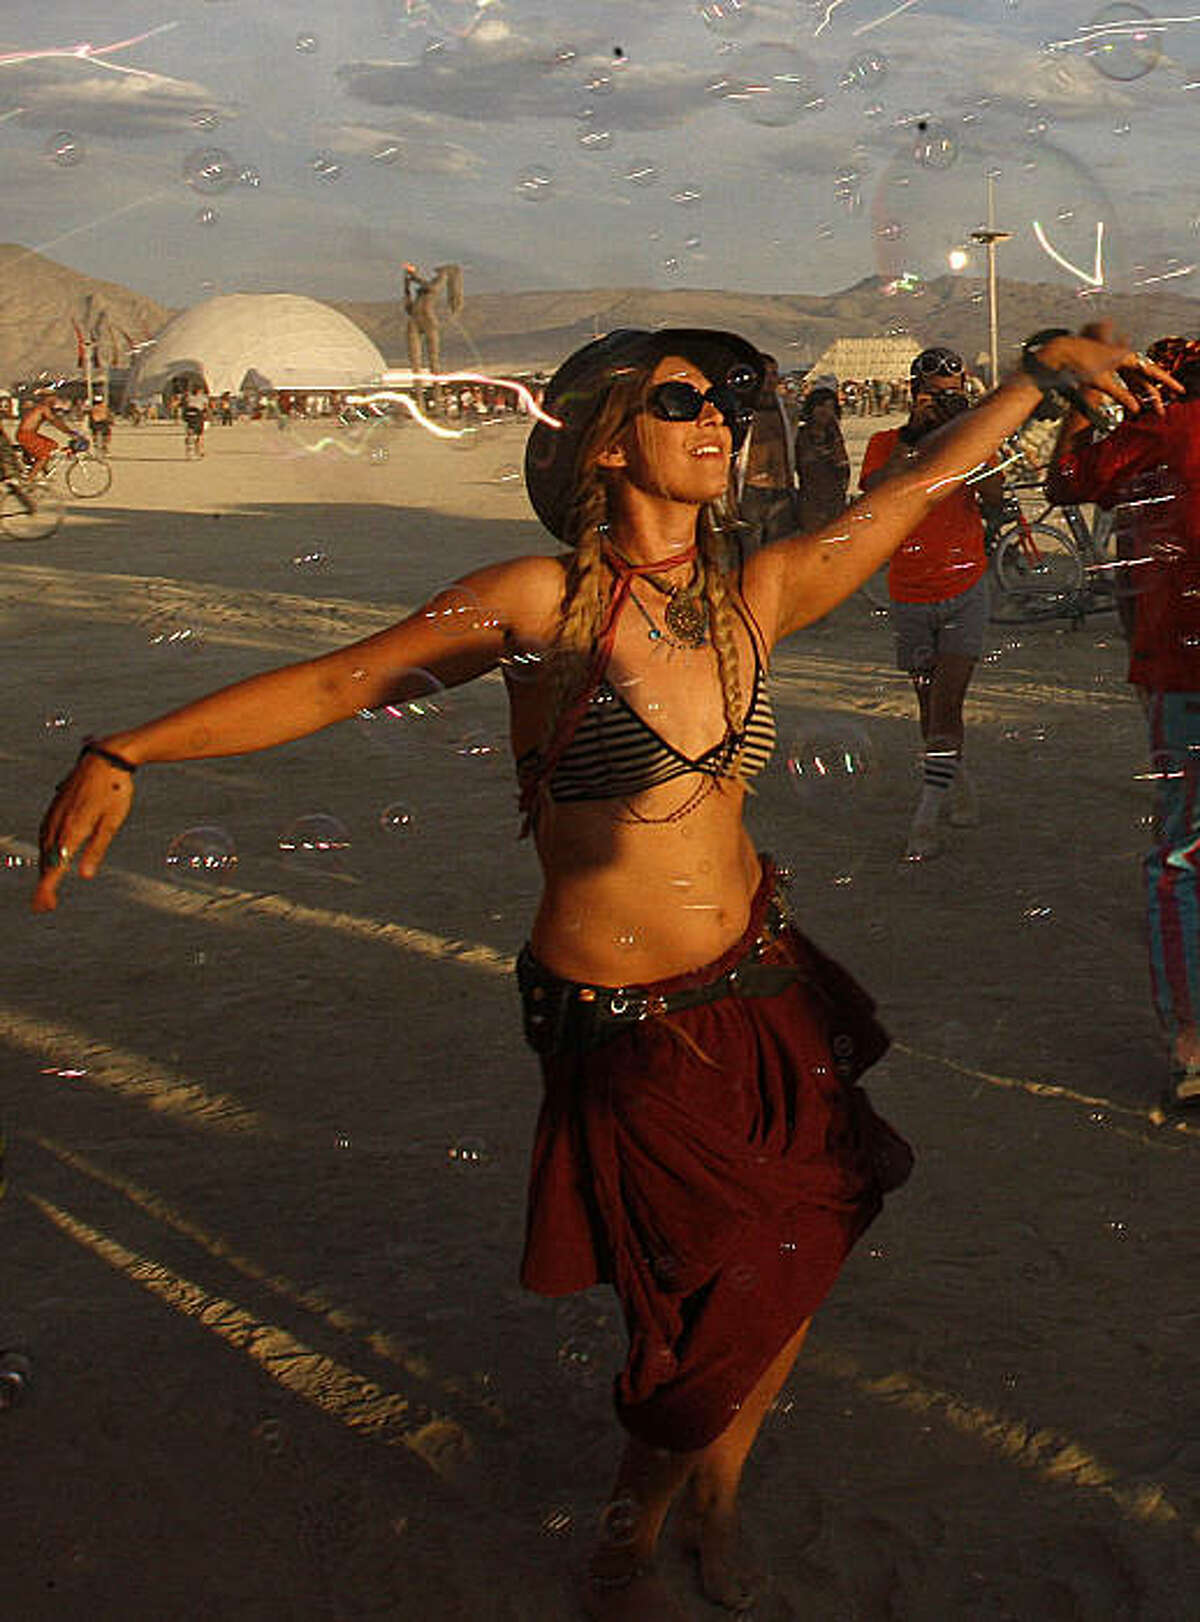 Fbi Spied On Burning Man Festival Documents Reveal